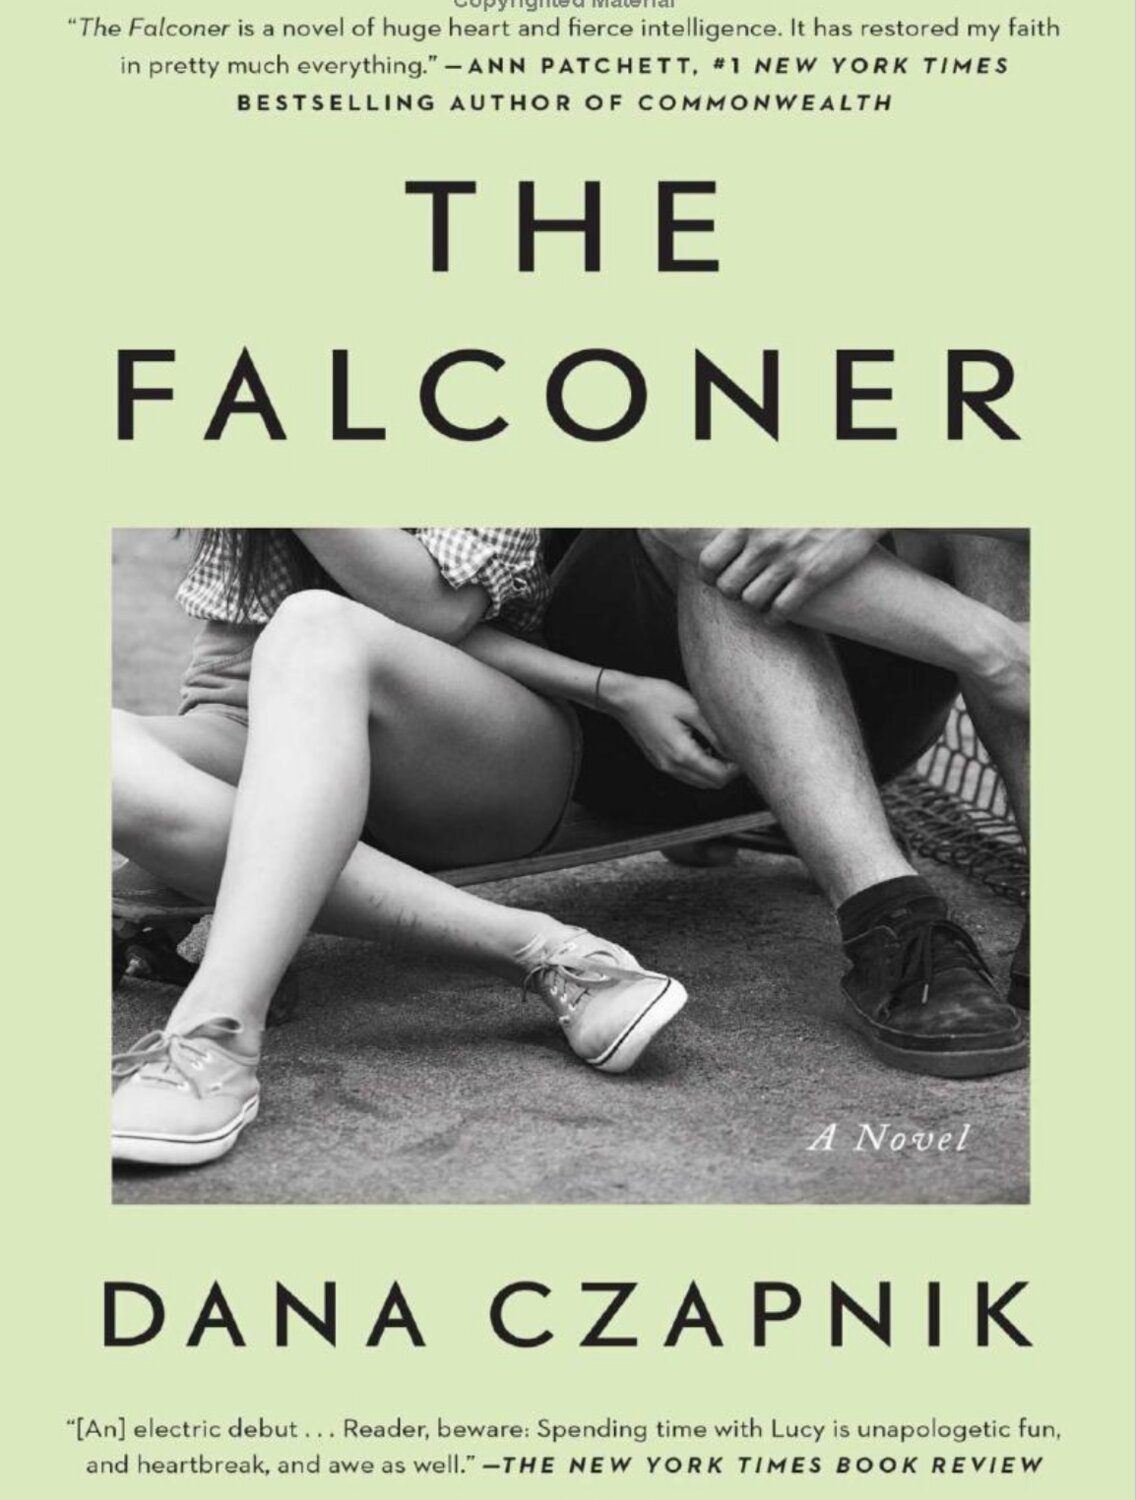 "The Falconer" by Dana Czapnik